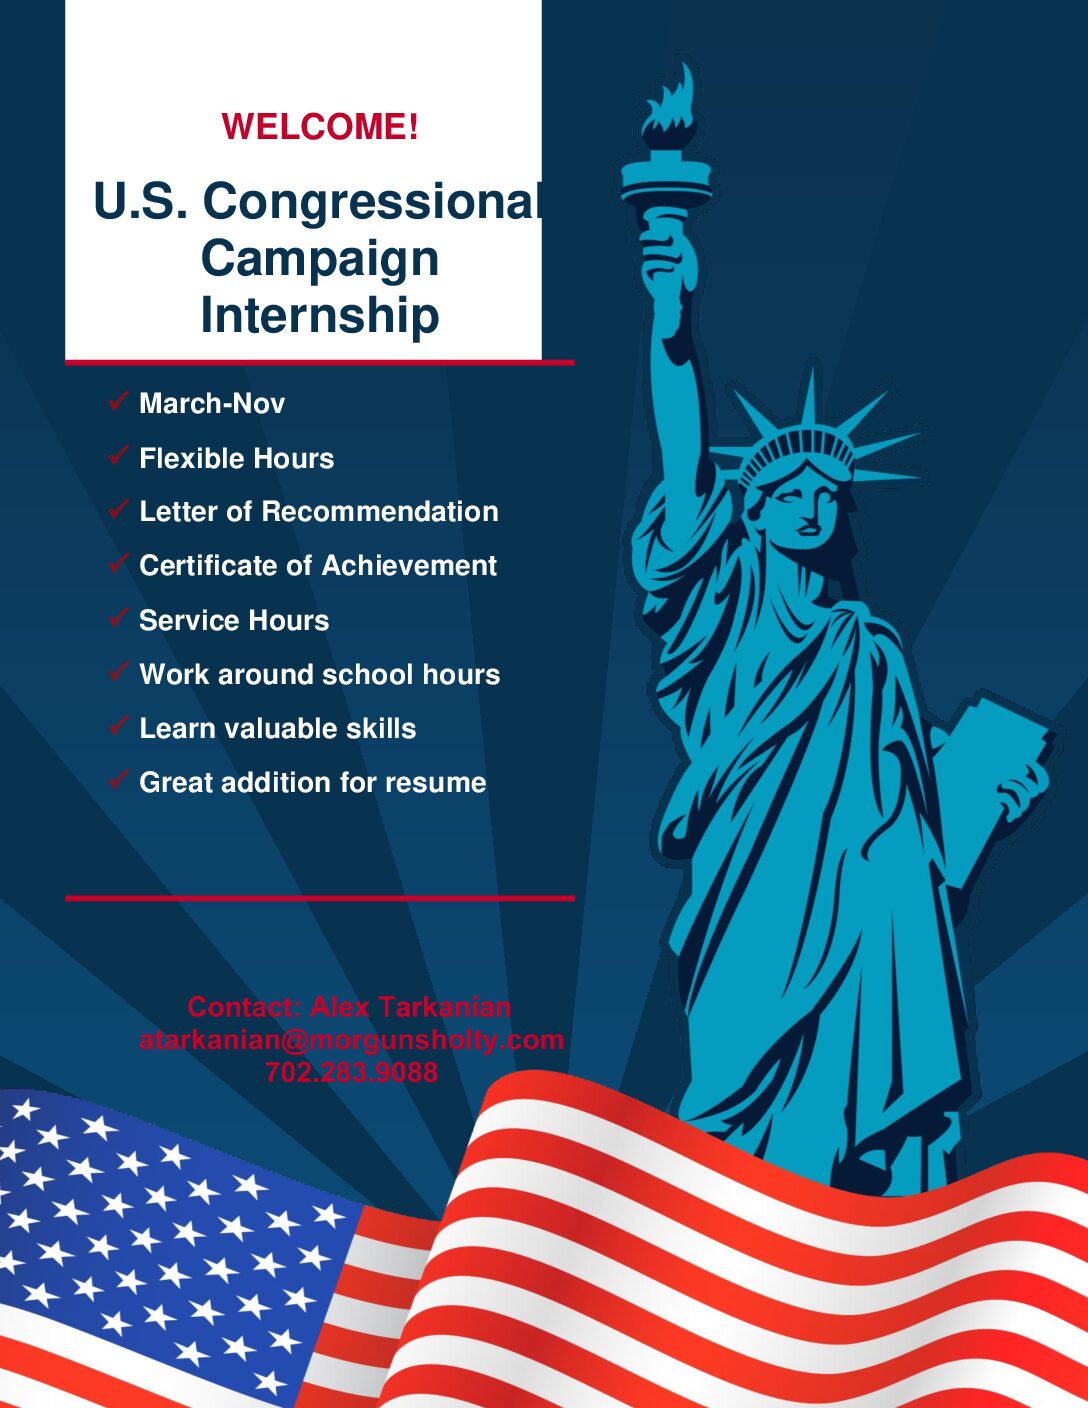 U.S Congressional Campaign Internship